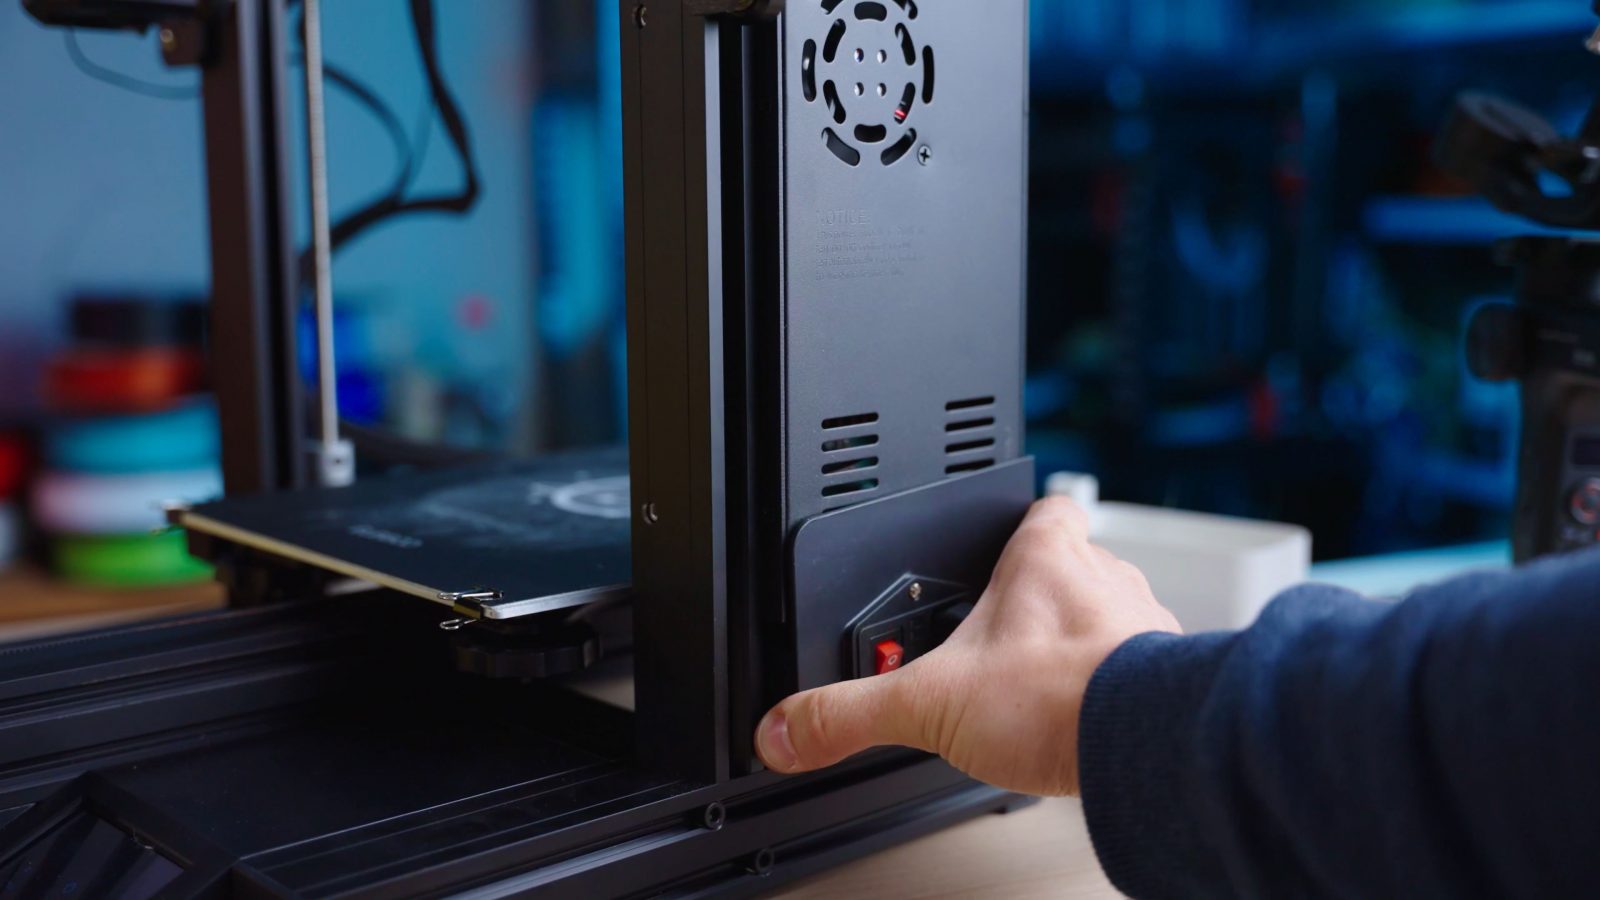 Elegoo Neptune 2 3D printer review: The best printer you'll never